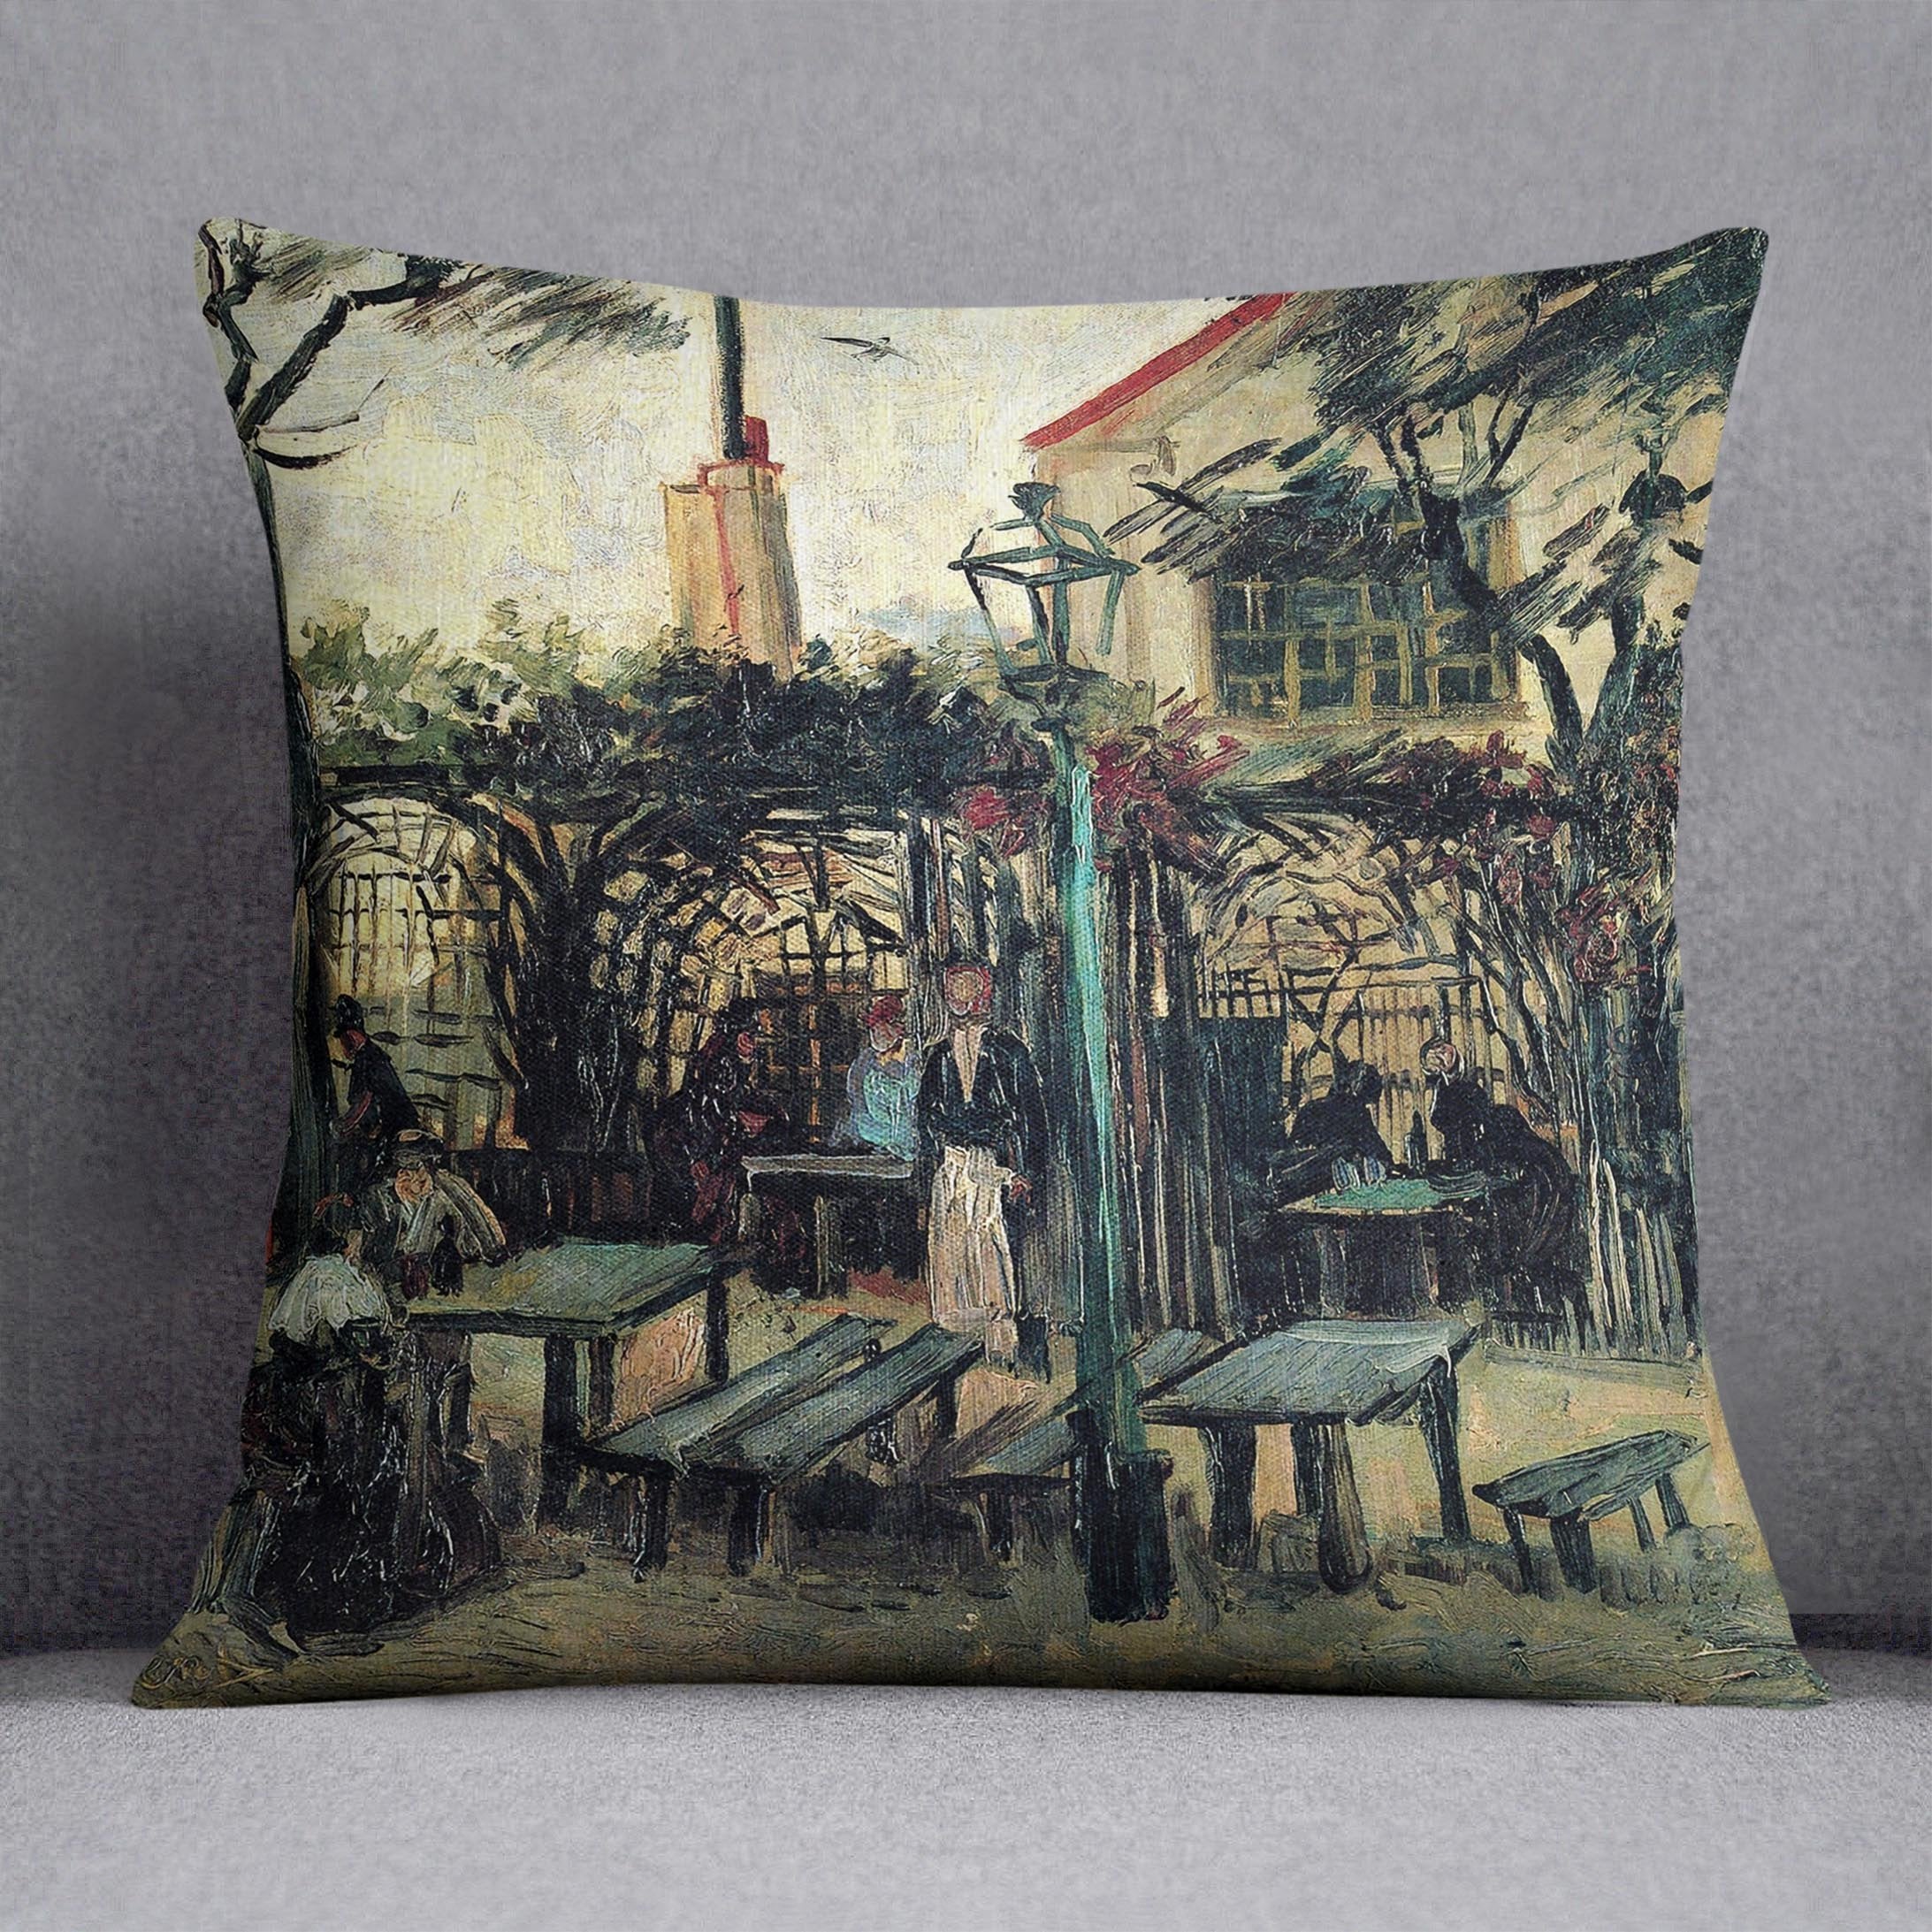 Terrace of a Cafe on Montmartre La Guinguette1 by Van Gogh Throw Pillow